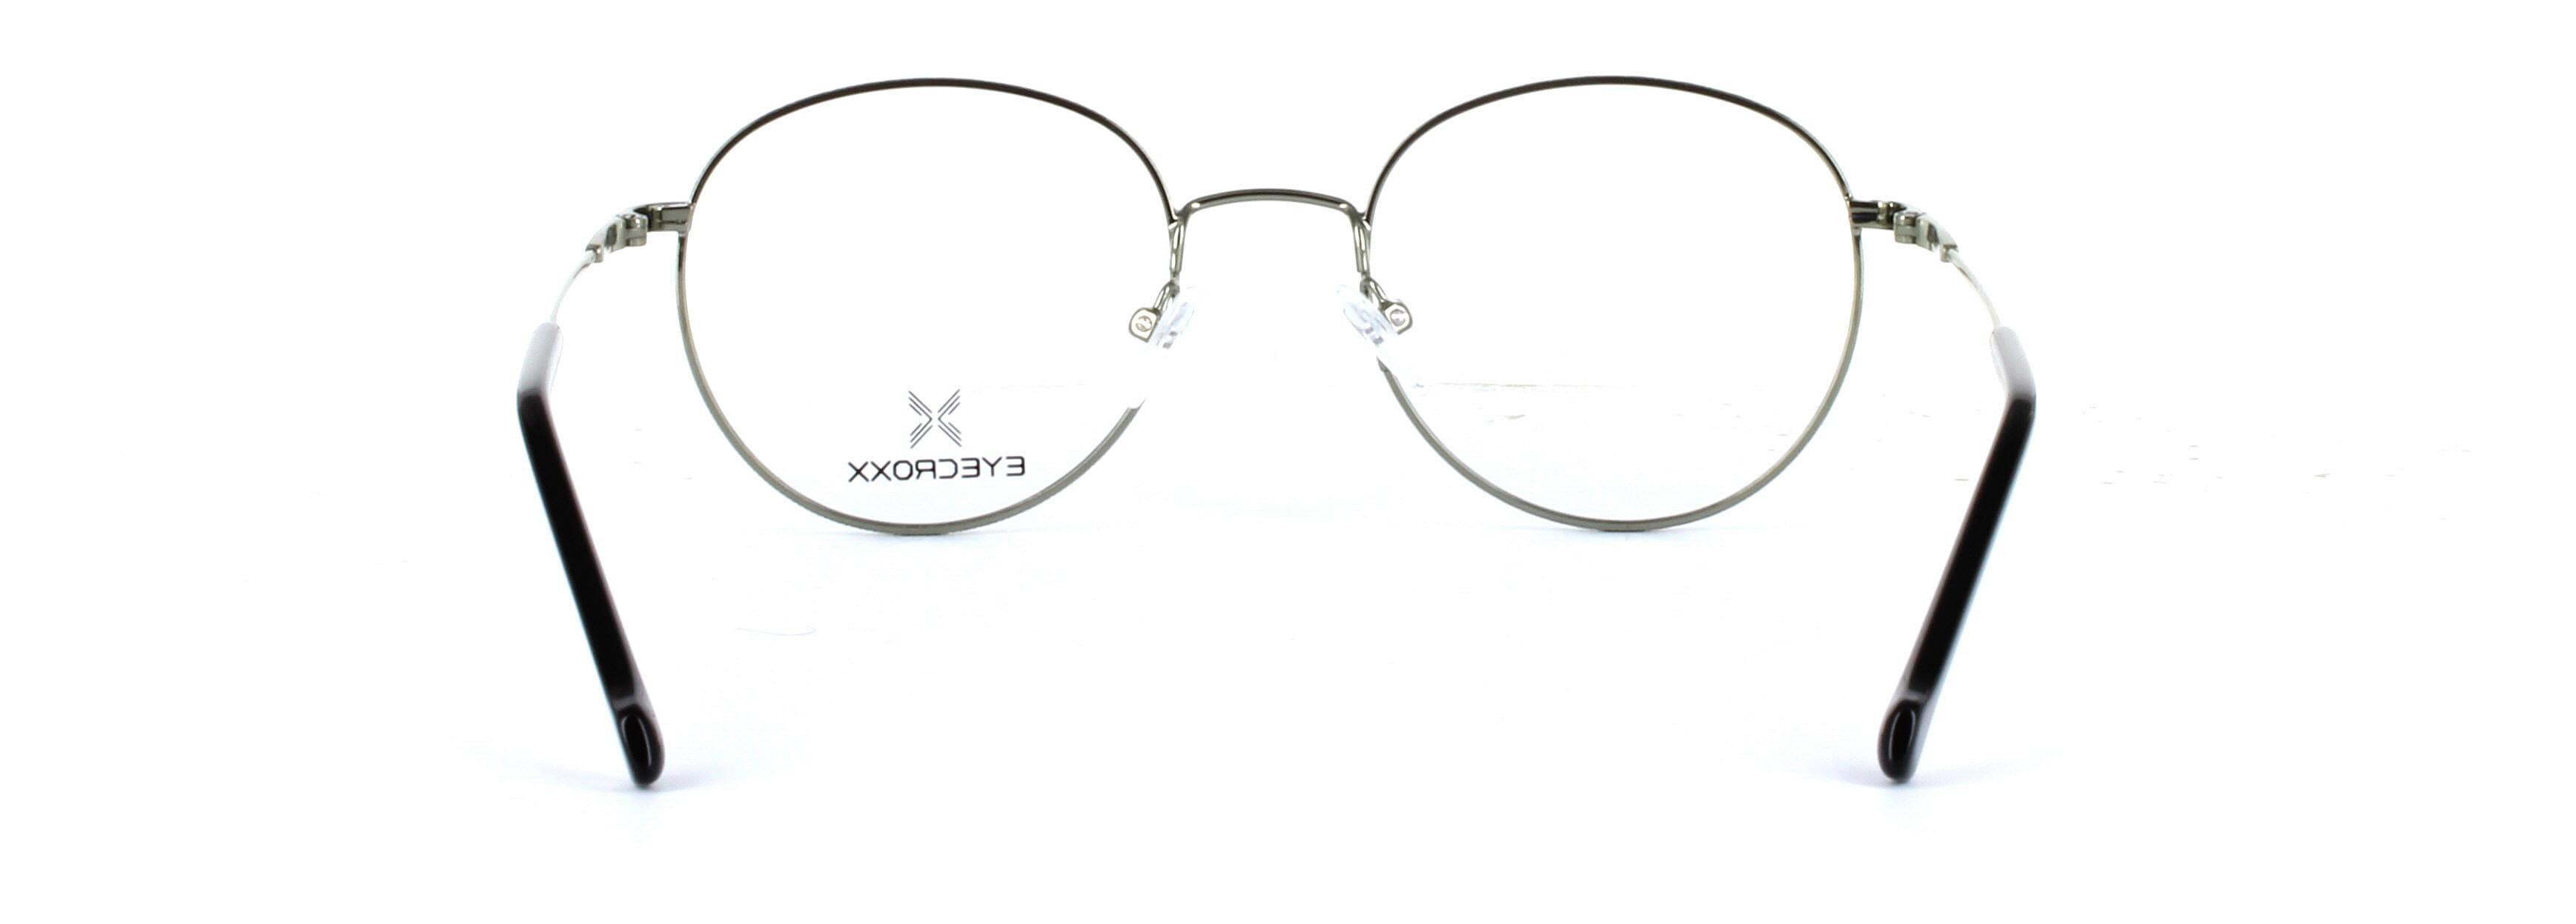 Eyecroxx 570-C3 Blue Full Rim Round Metal Glasses - Image View 3